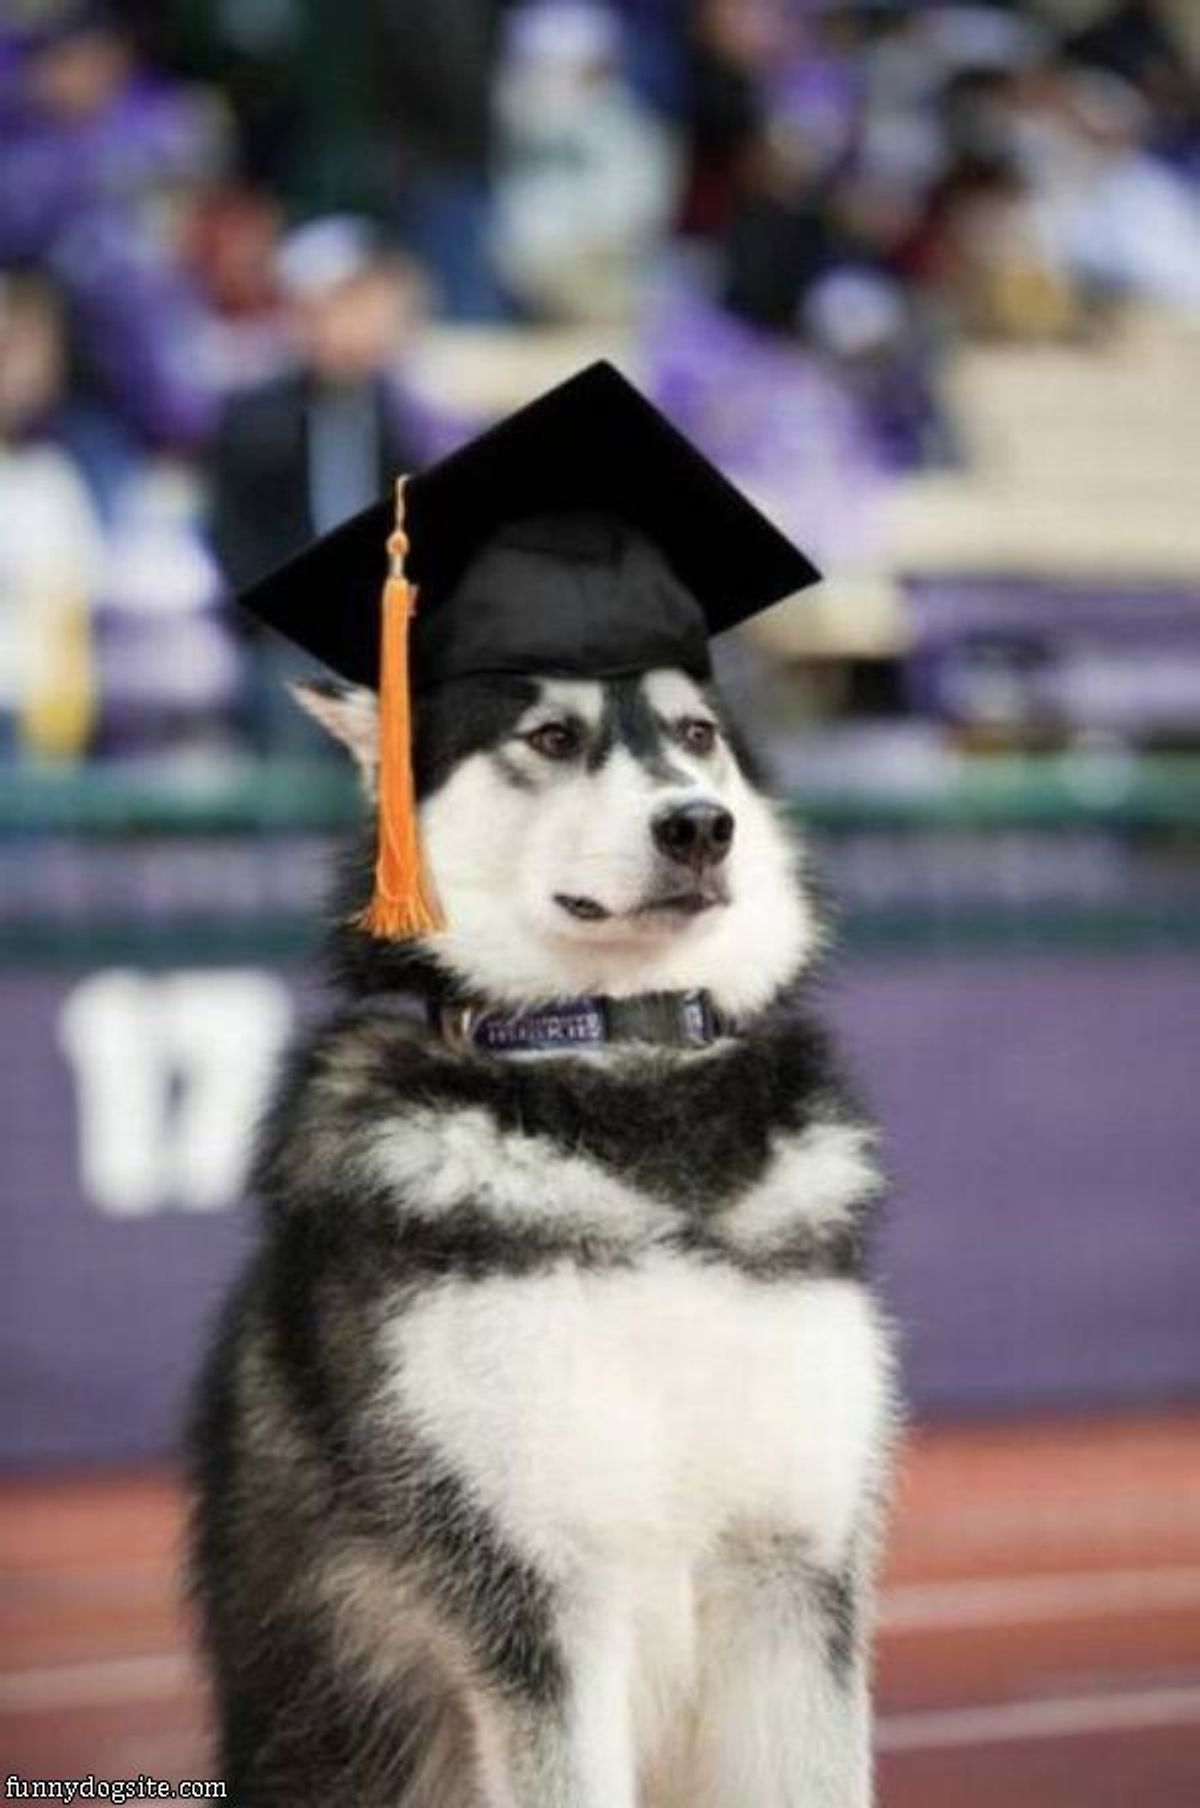 Help, I'm a Sophomore Already Afraid Of Graduating